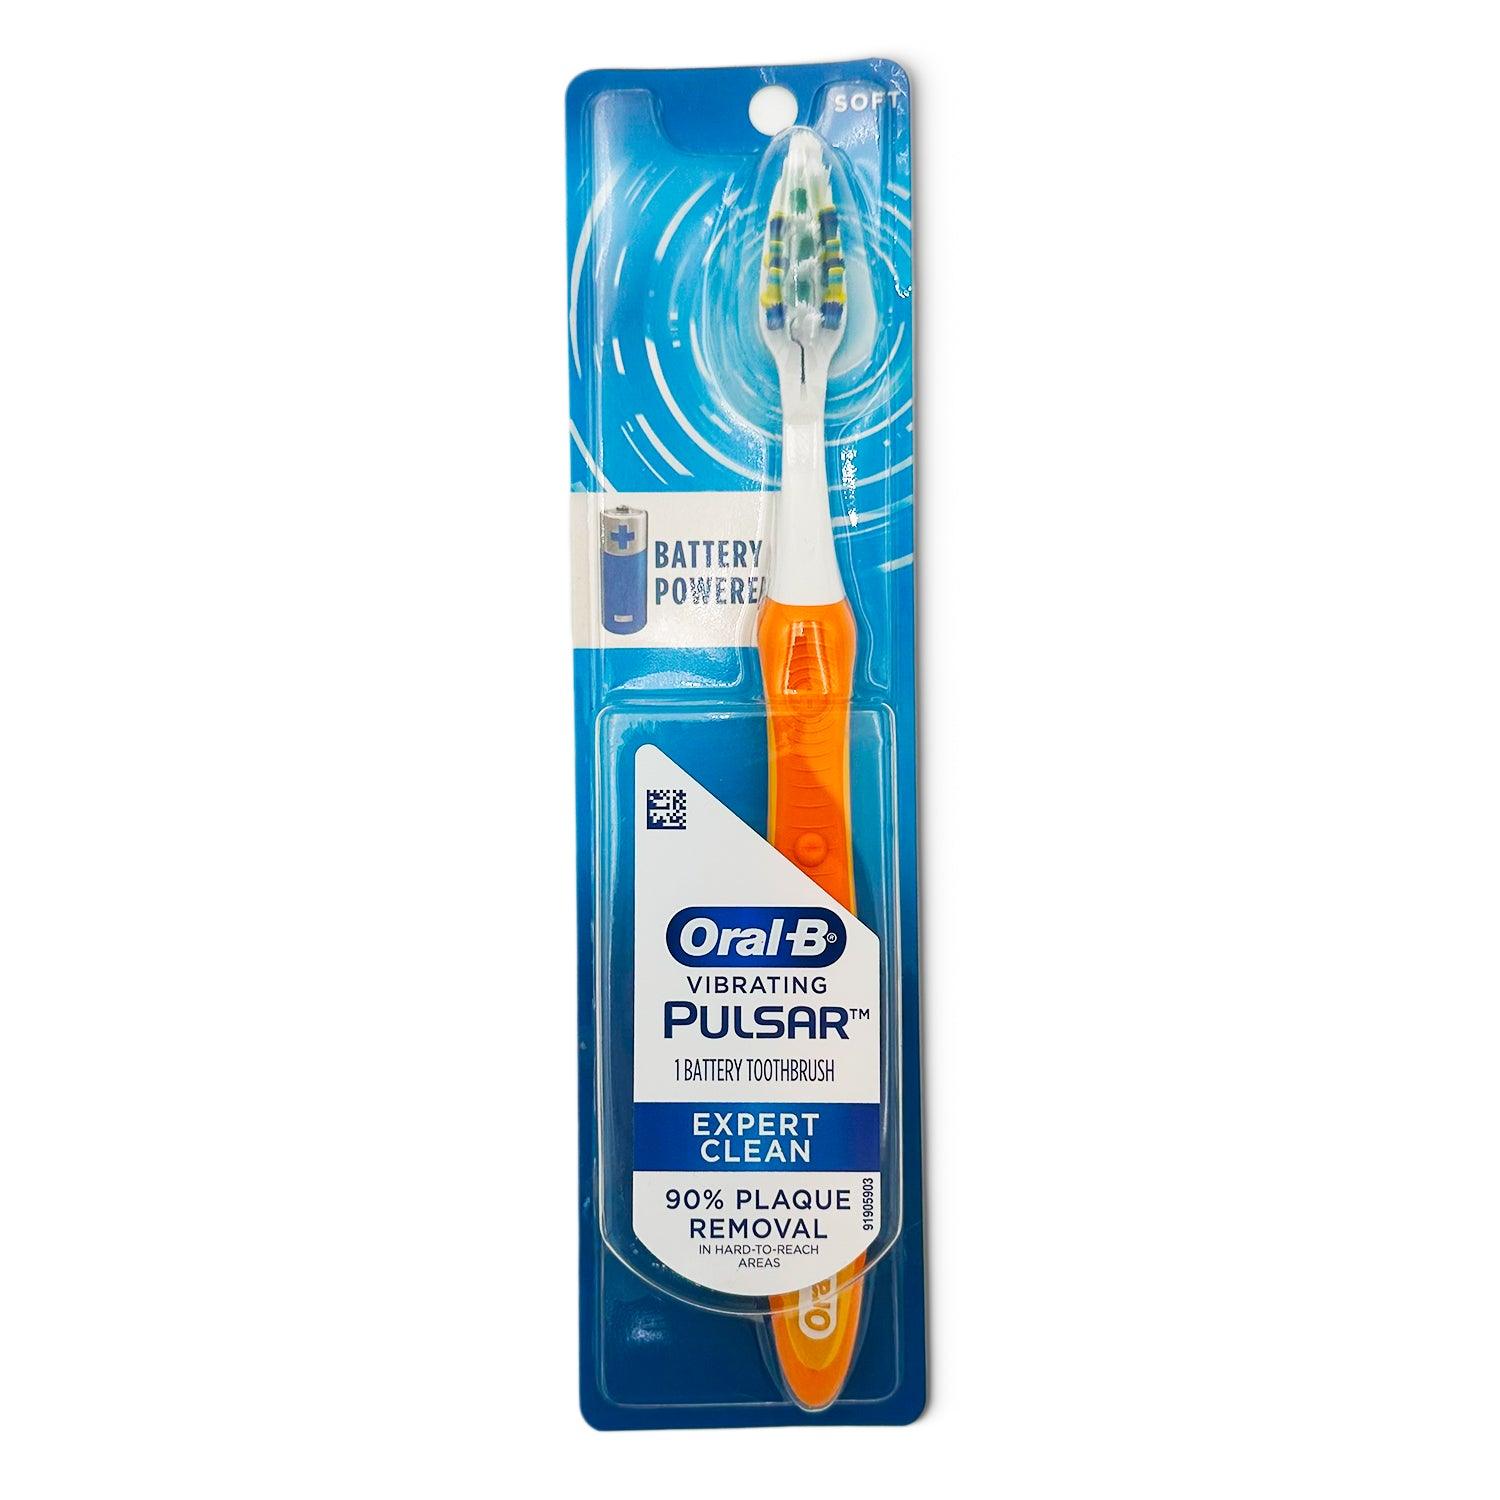 oral-b | vibrating pulsar, expert clean, battery toothbrush | orange - Home Revival Shop